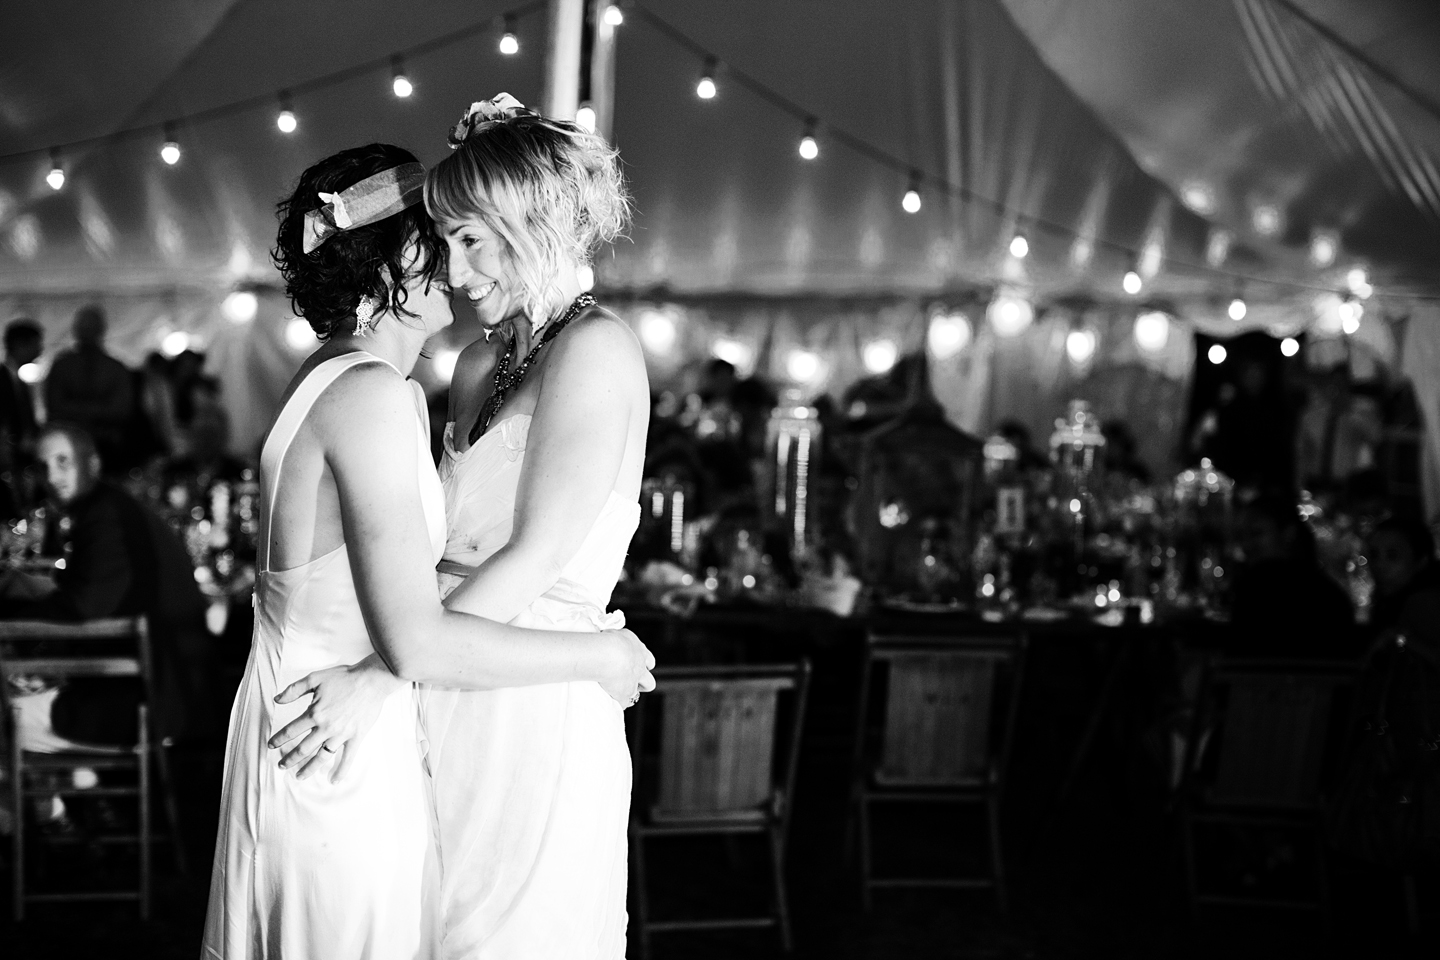 Finlayson, MN Wedding | Wedding Photographer Eliesa Johnson of Photogen Inc. | Based in Minneapolis, Minnesota